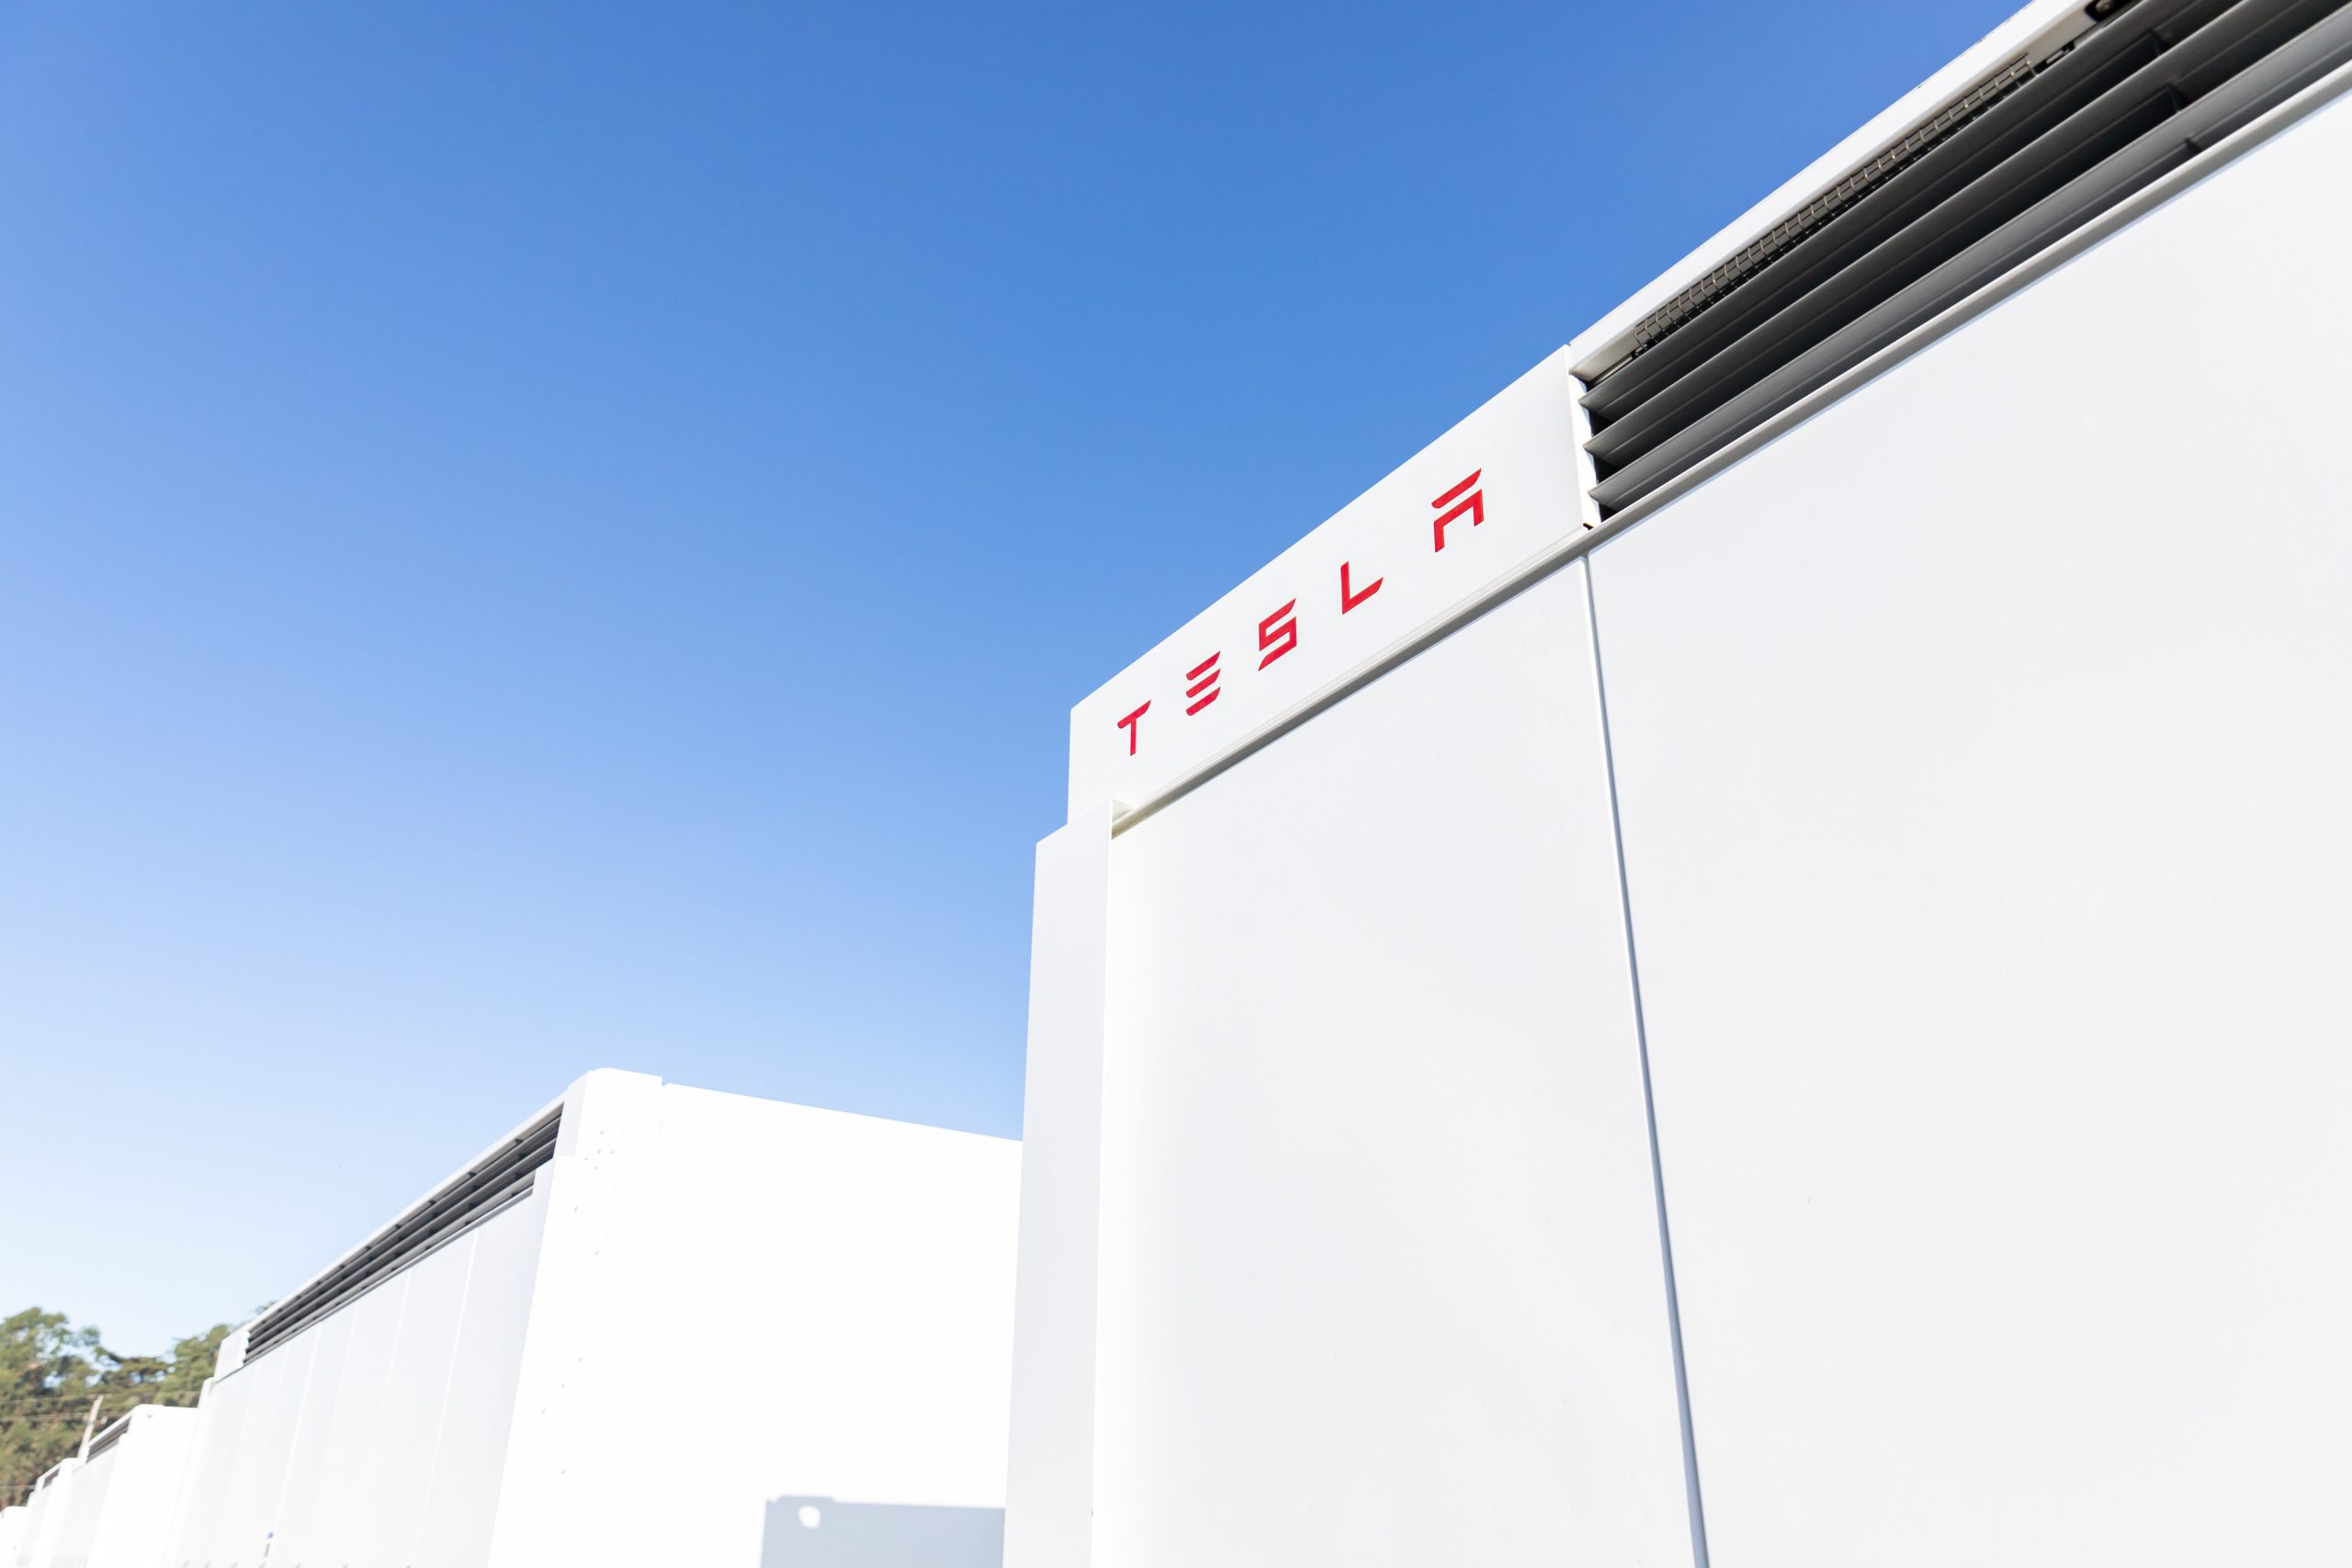 Tesla Megapack Battery Project Proposed